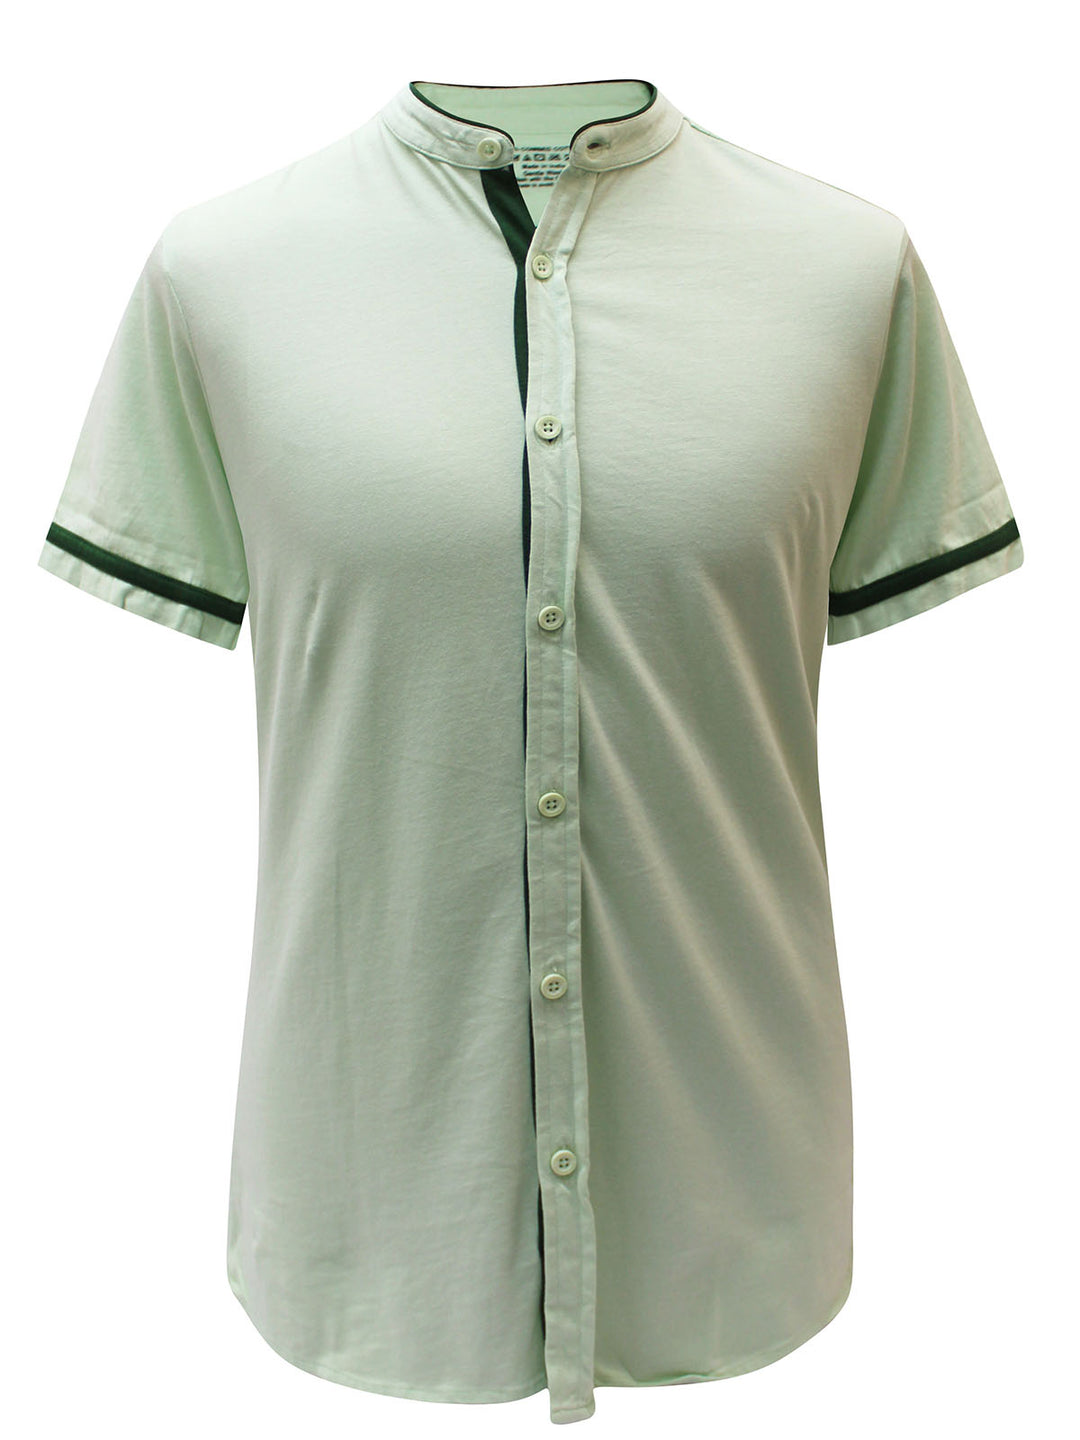 Men's Mandarin Collar Button Down Shirt with Fringes